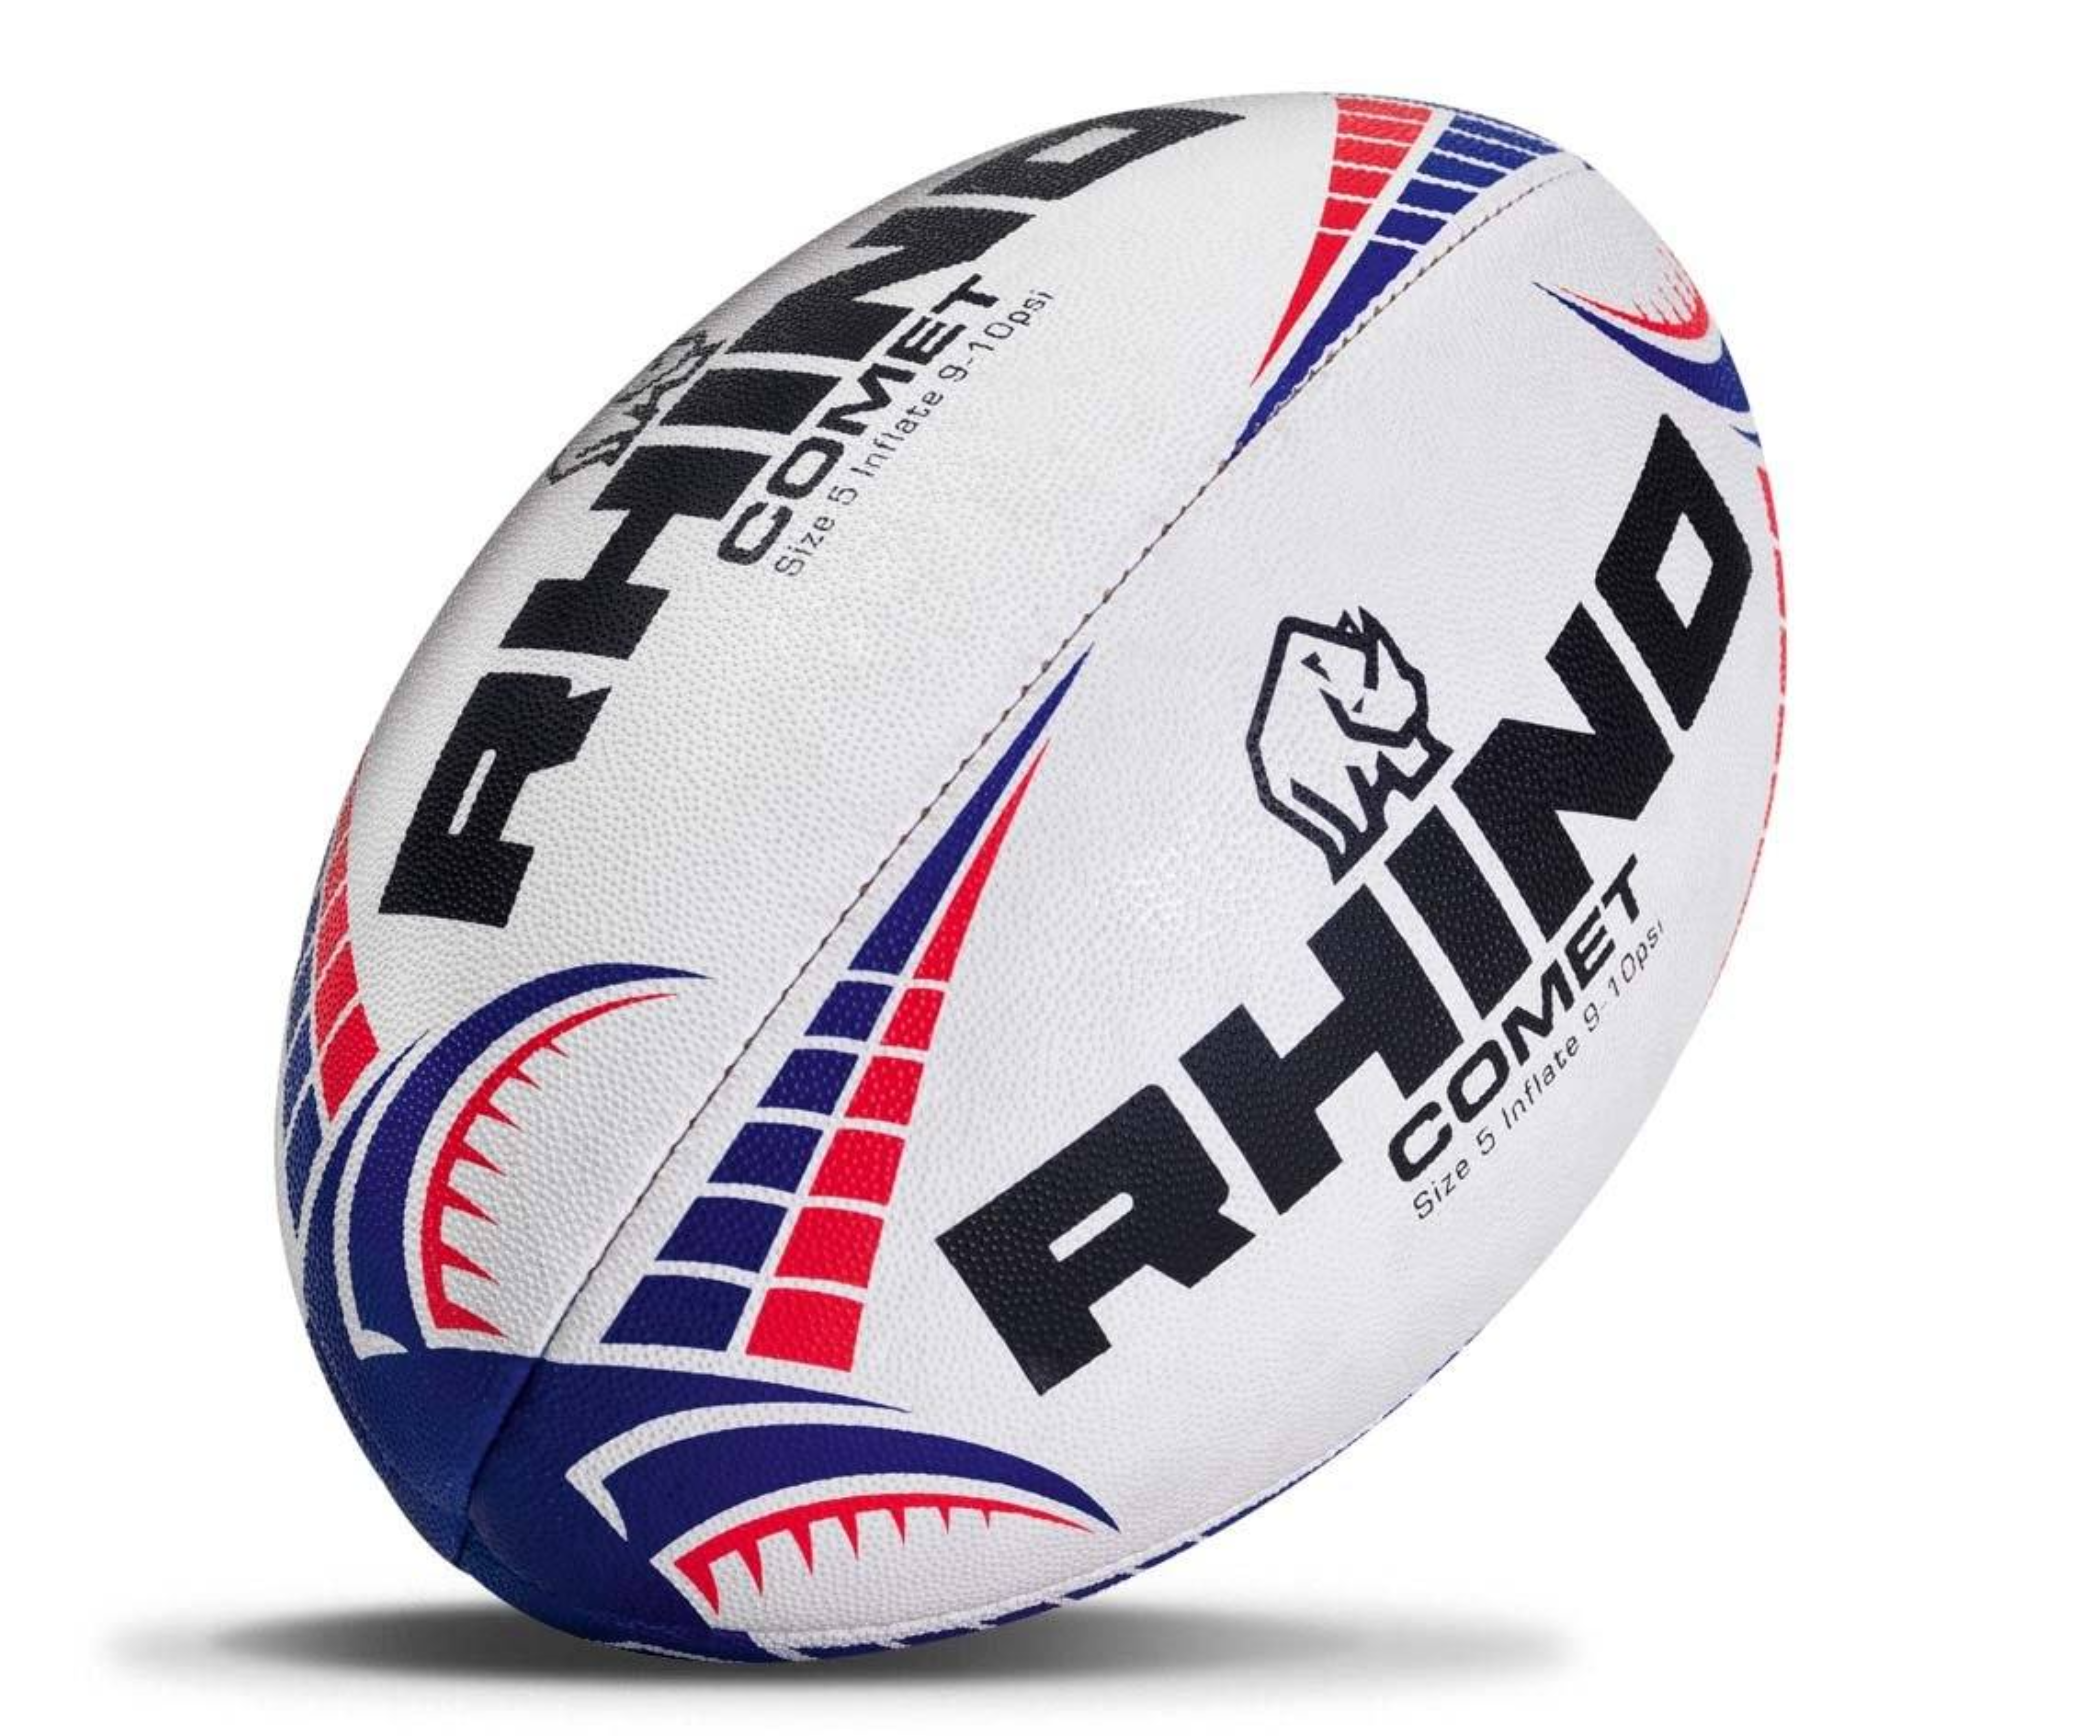 Rhino Comet Rugby Ball Match